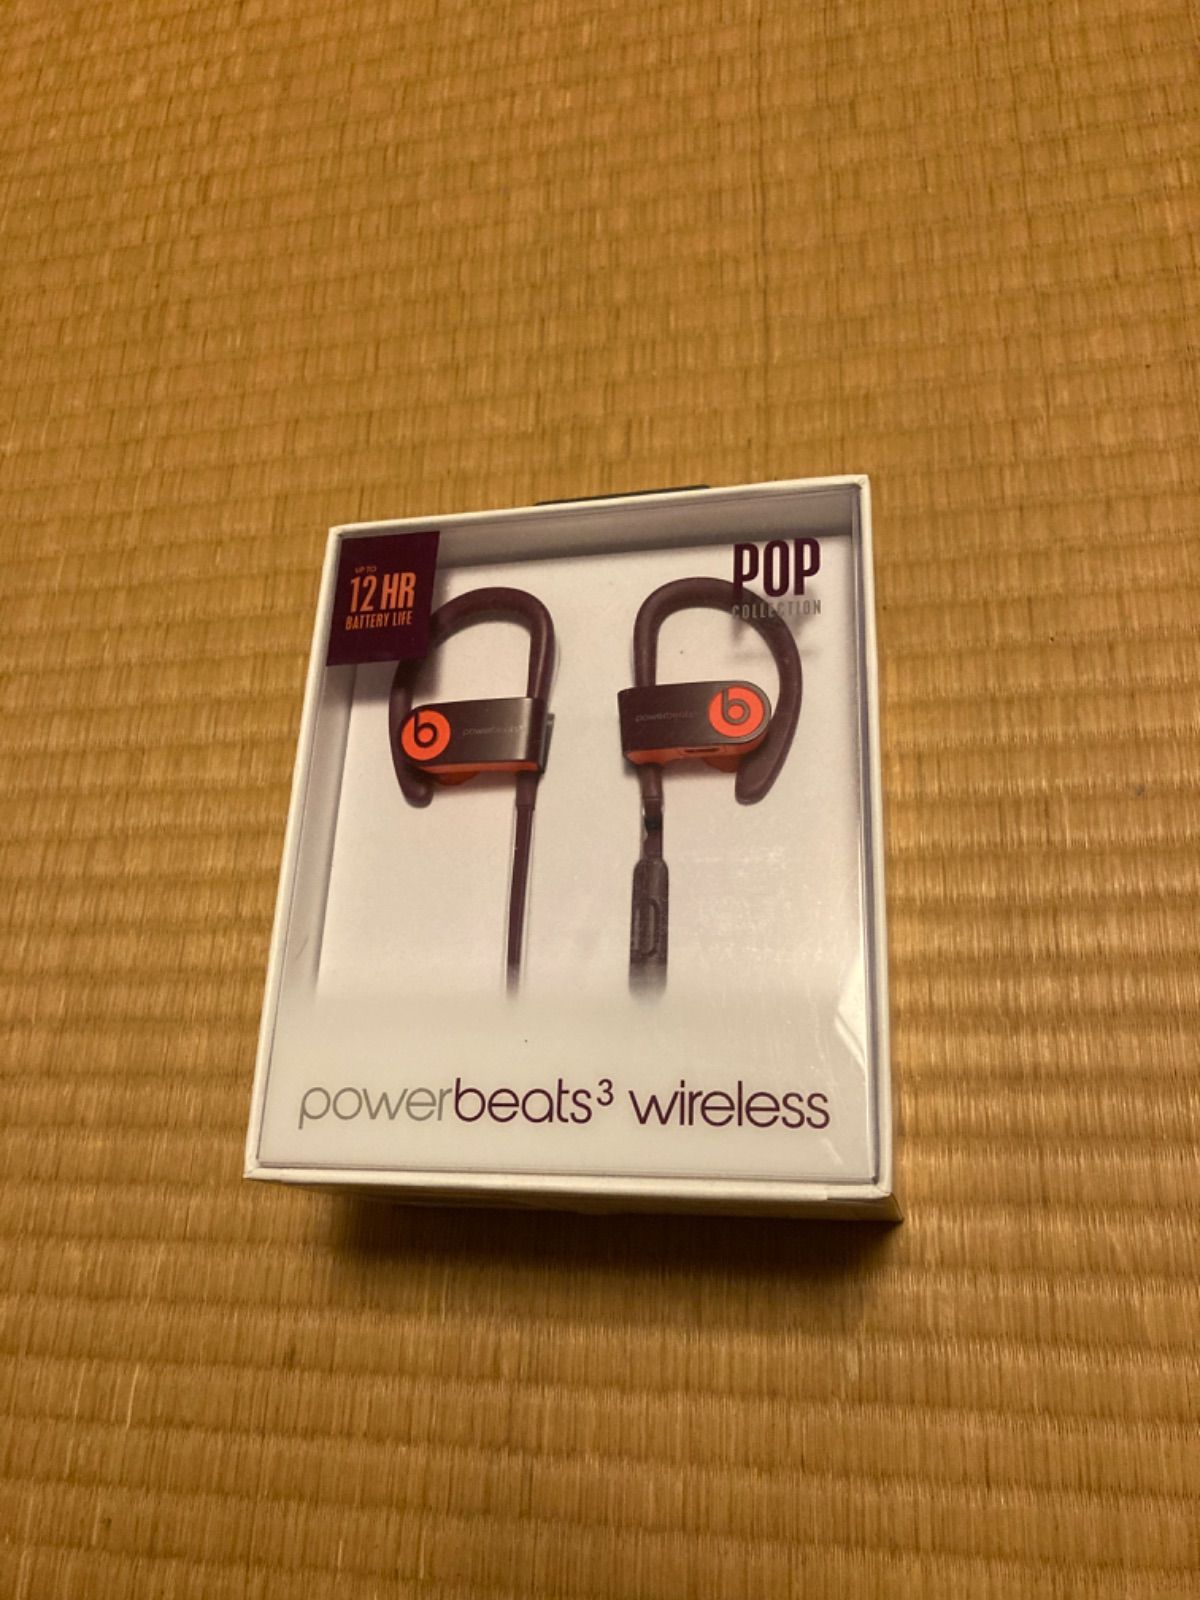 powerbeats3 wireless ワイヤレスイヤホン - メルカリ